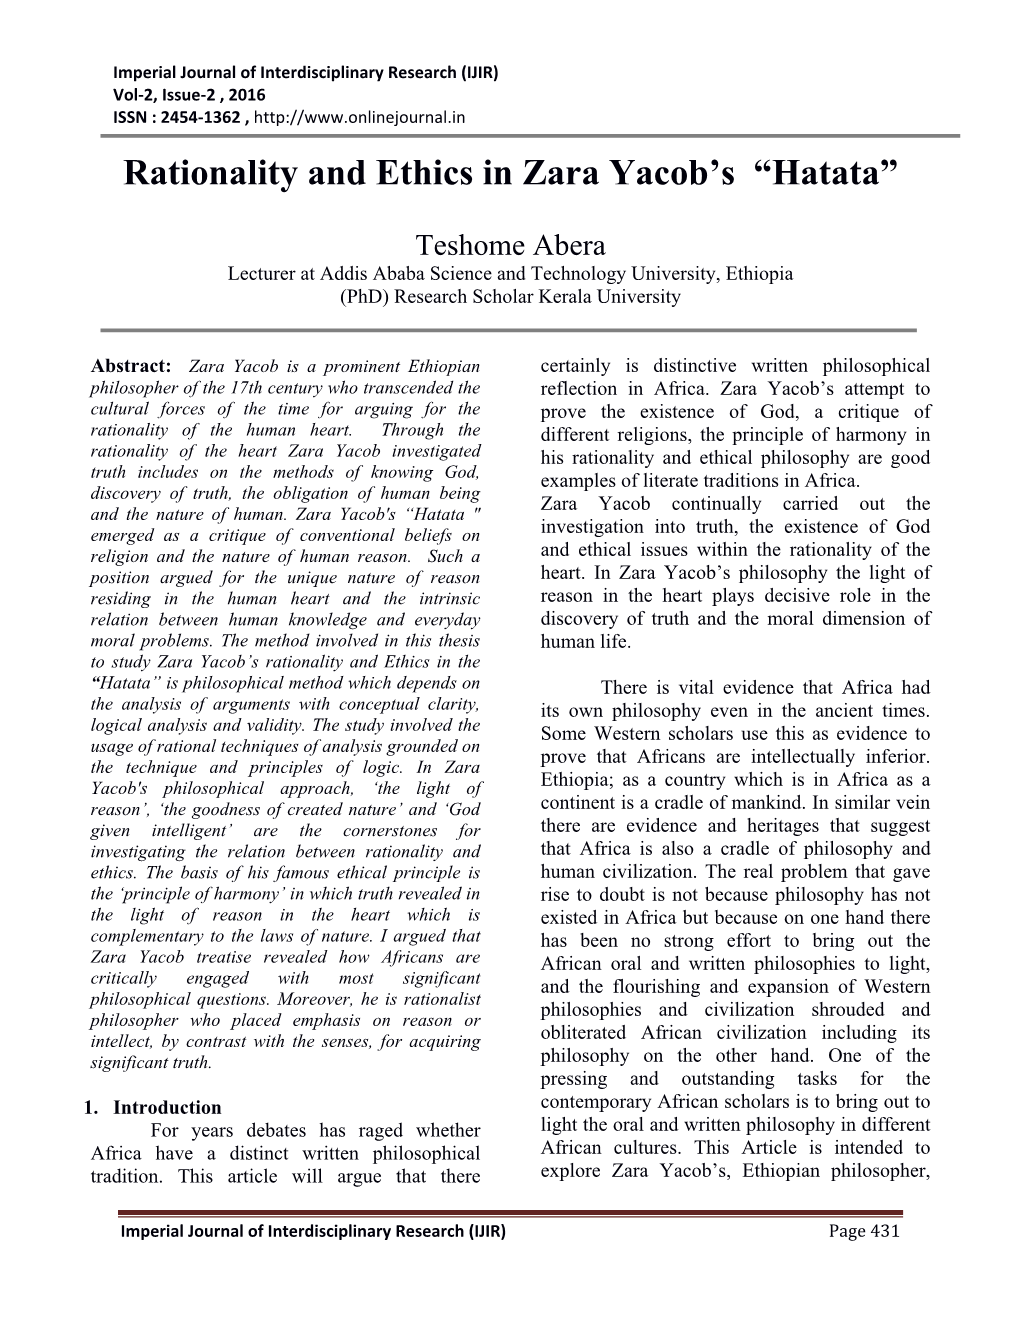 Rationality and Ethics in Zara Yacob's “Hatata”